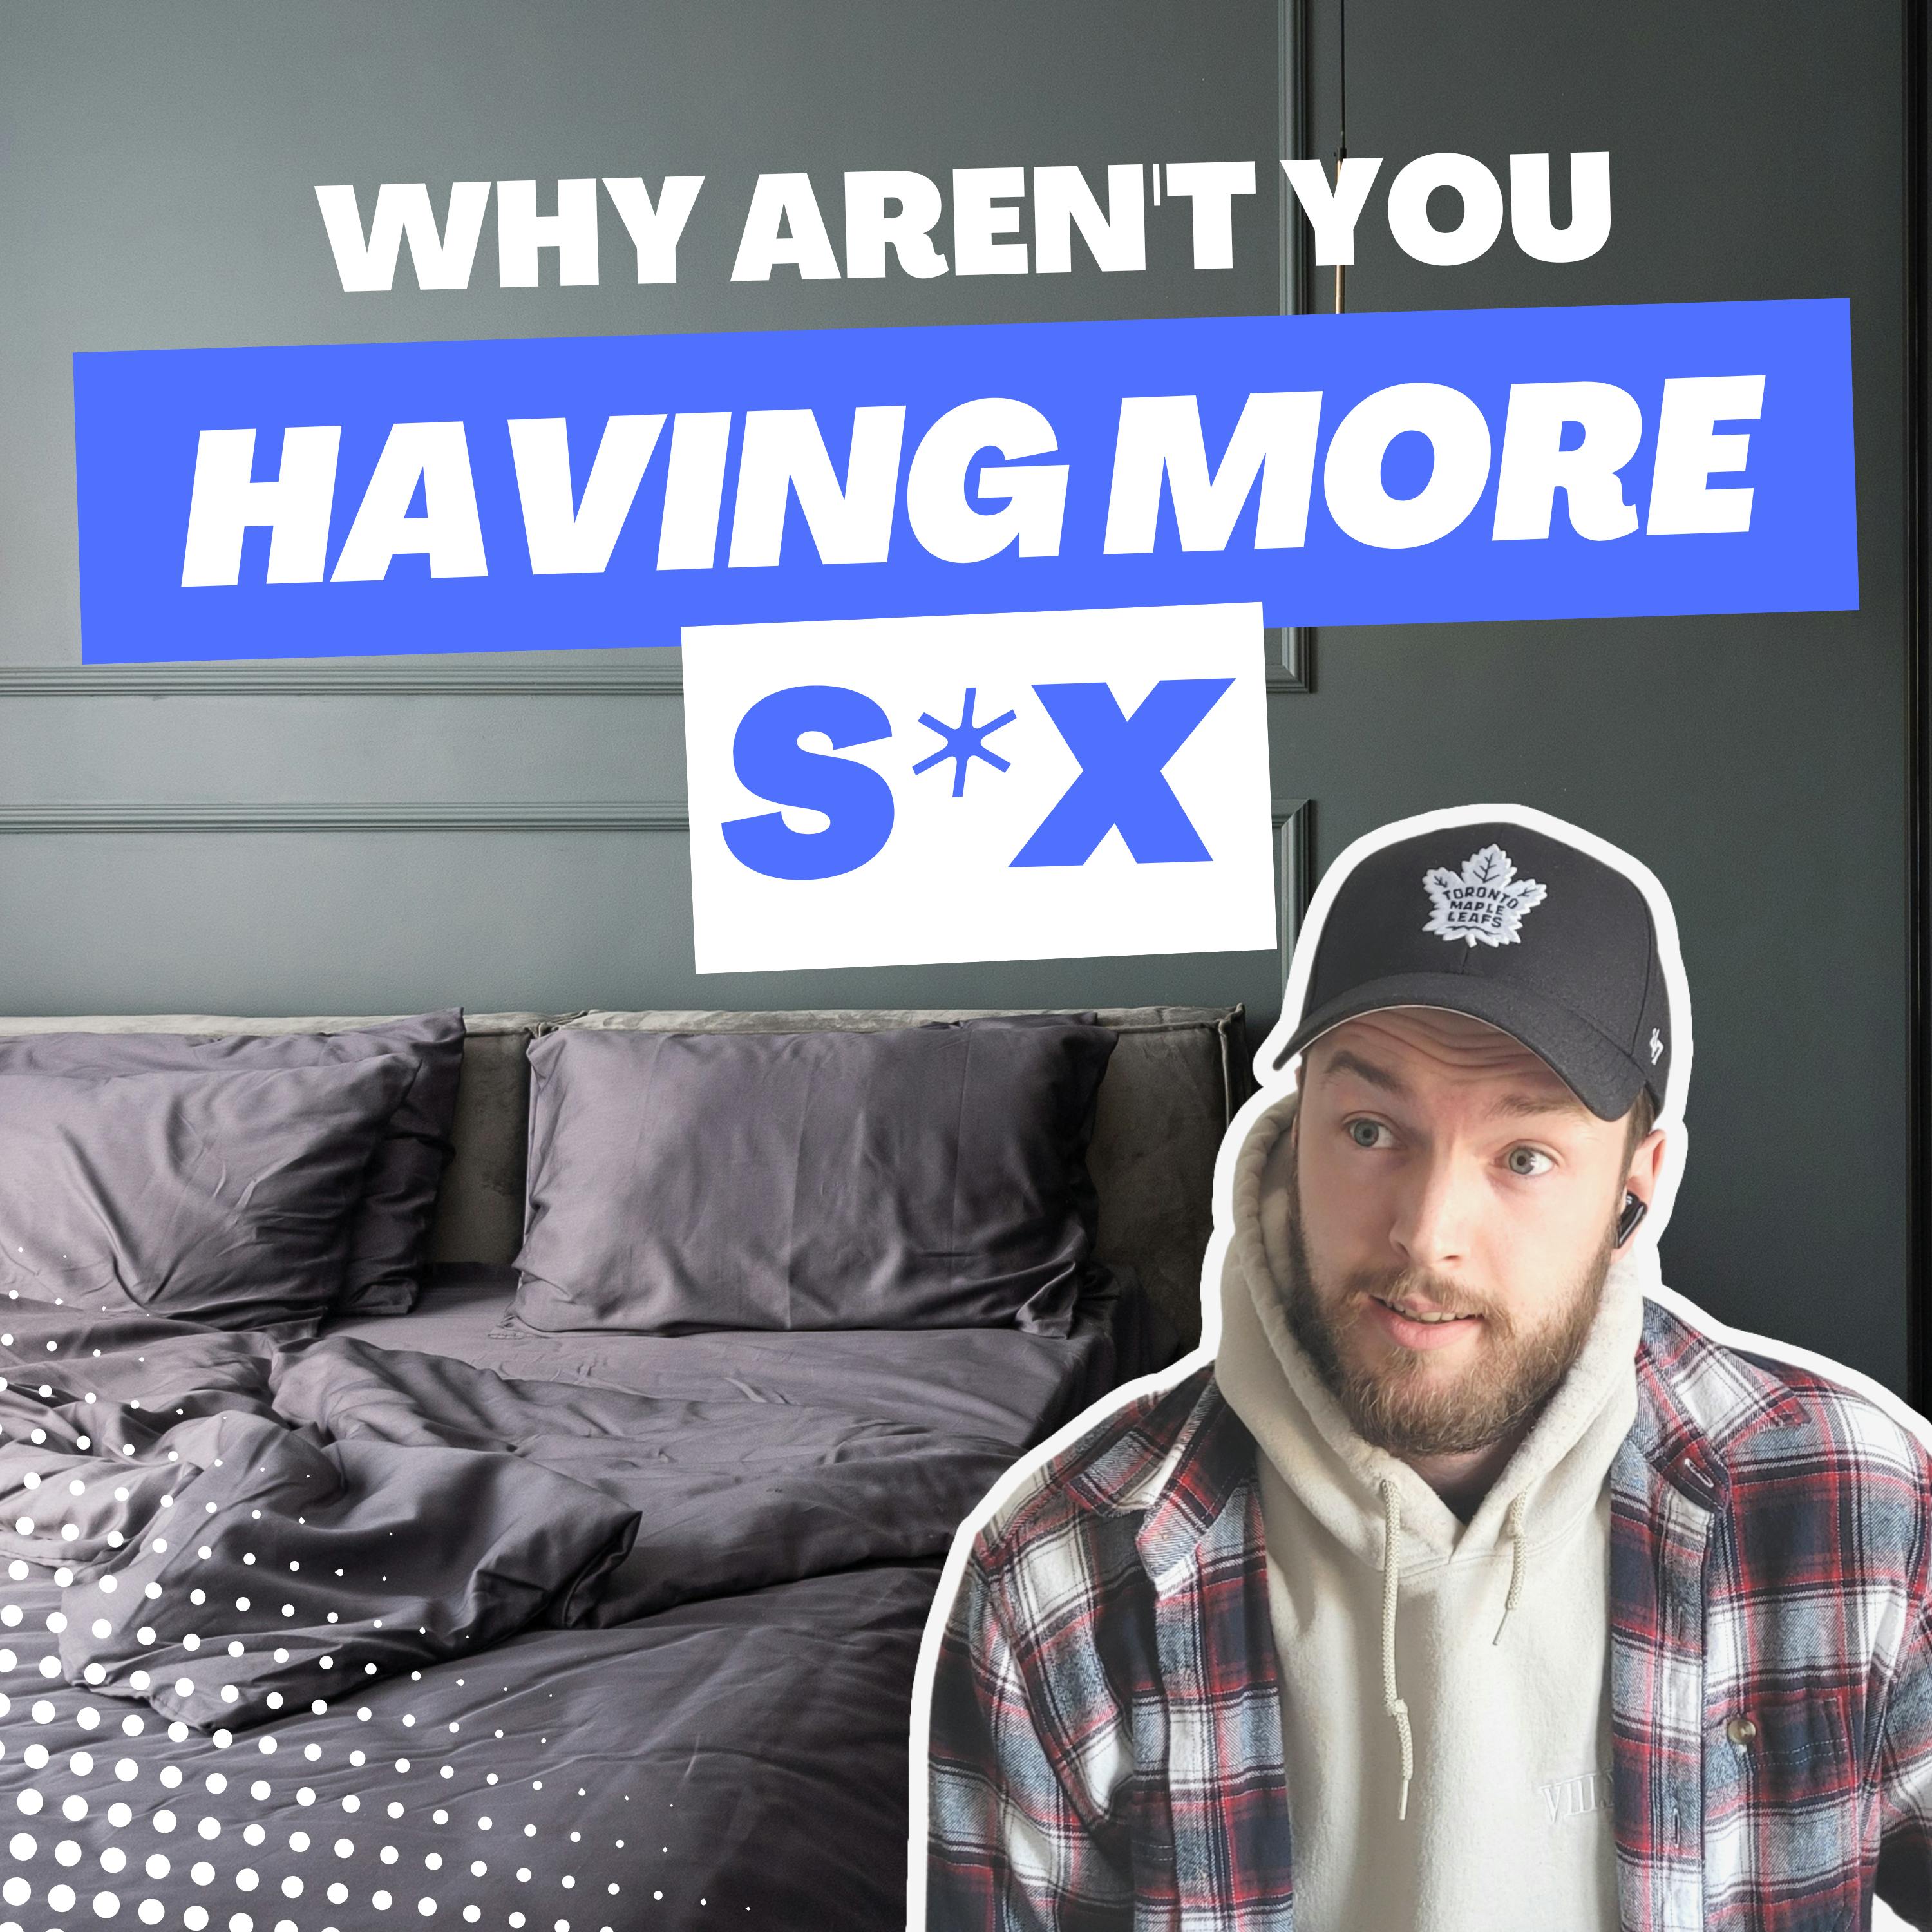 Why Aren't You Having MORE S3X? | AskReddit Wednesdays Image